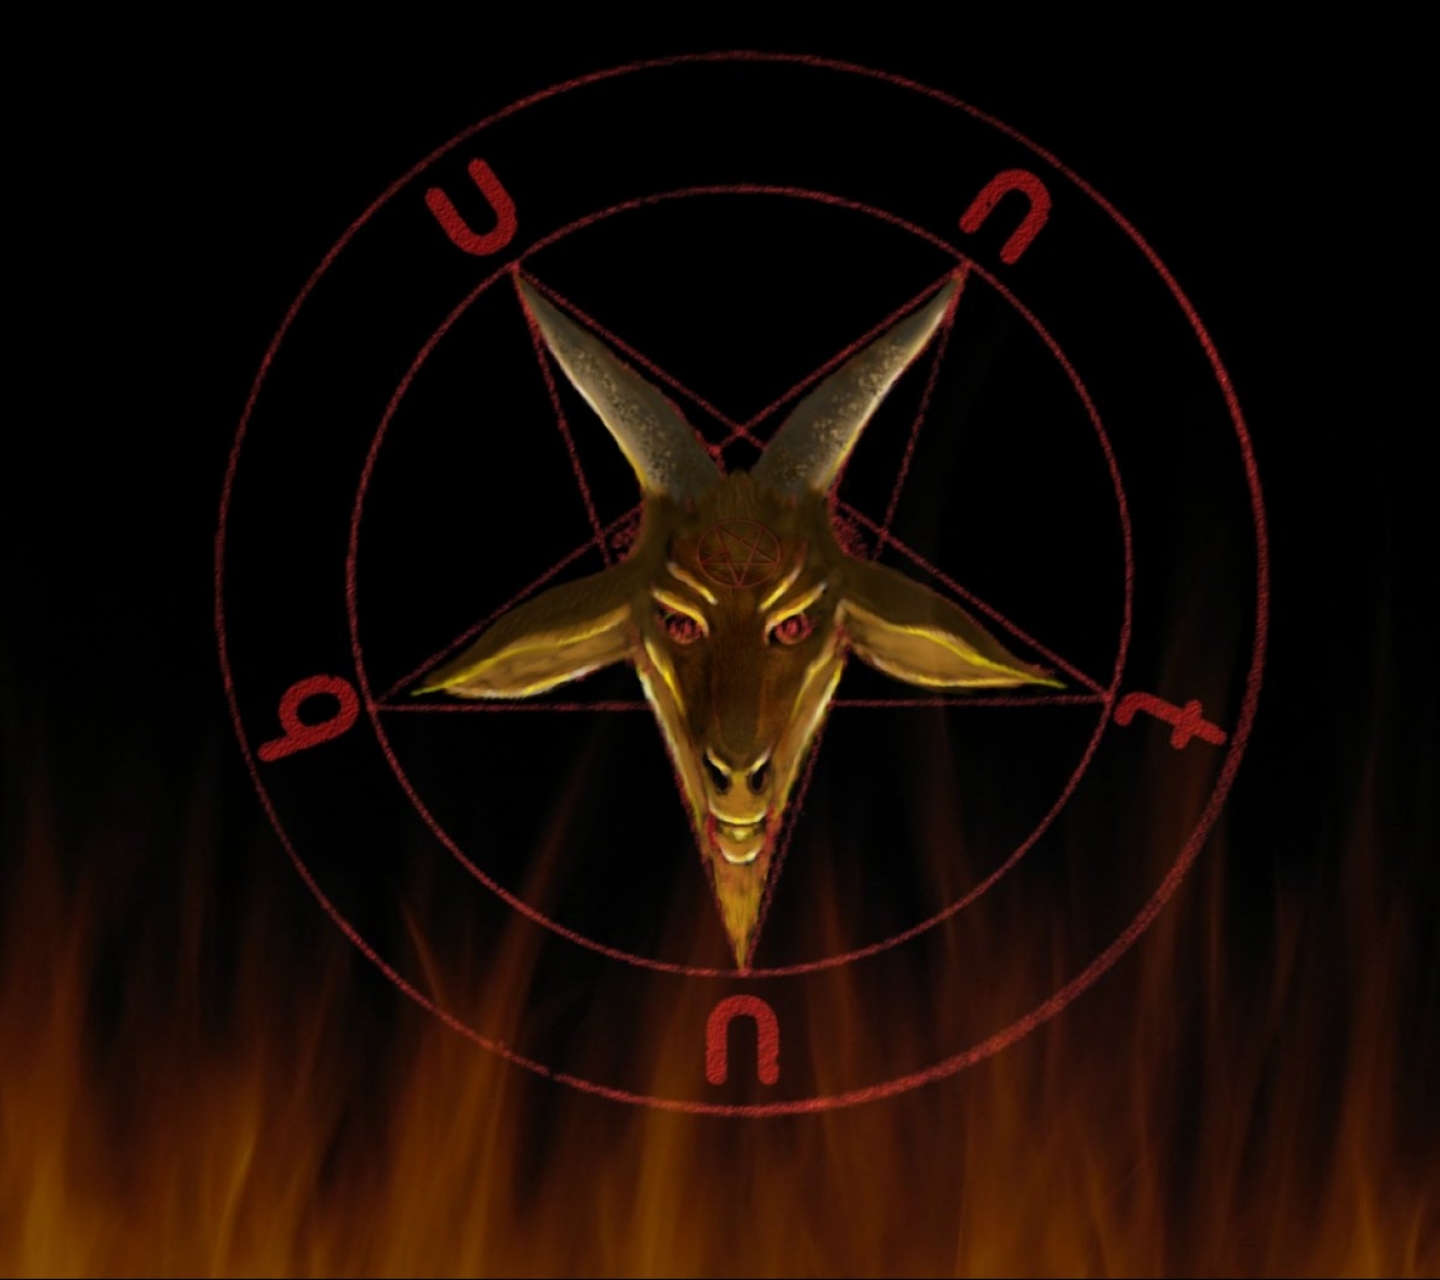 1197008 Hintergrundbild herunterladen humor, dunkel, satan, satanismus, baphomet, heide, okkult, okkulte, satanisch, dämon - Bildschirmschoner und Bilder kostenlos